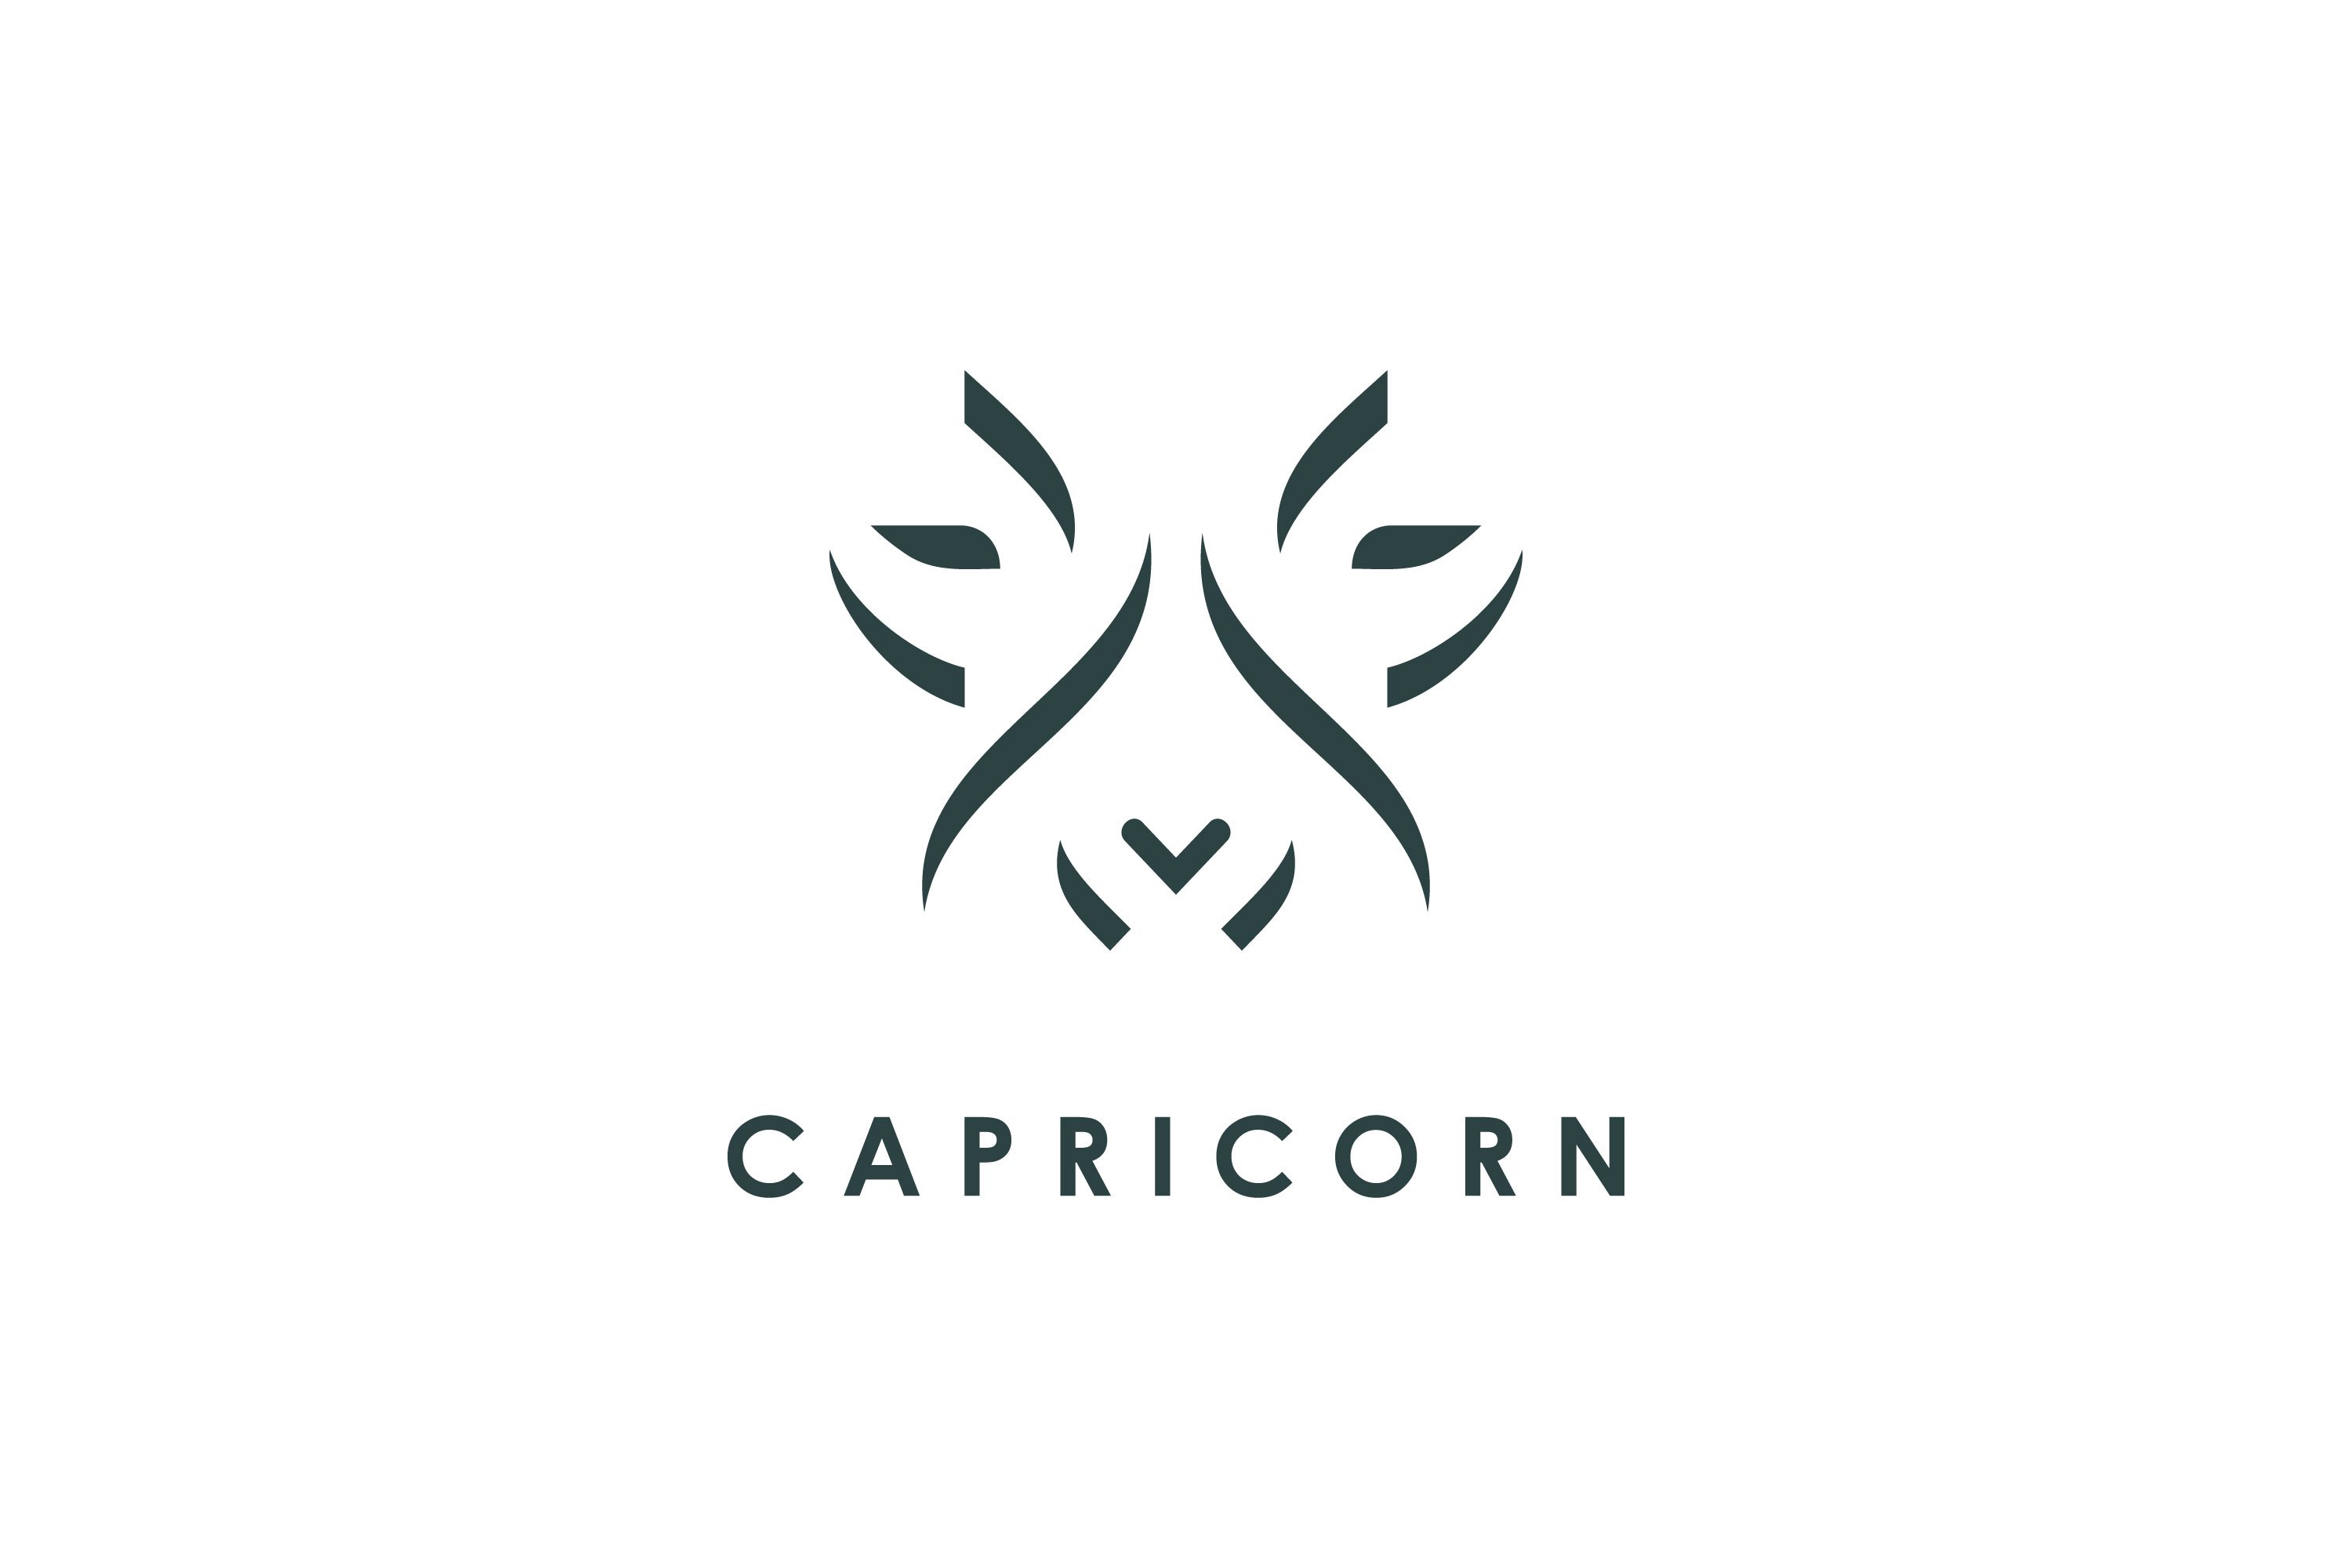 Simple Goat Logo for Zodiac Capricon cover image.